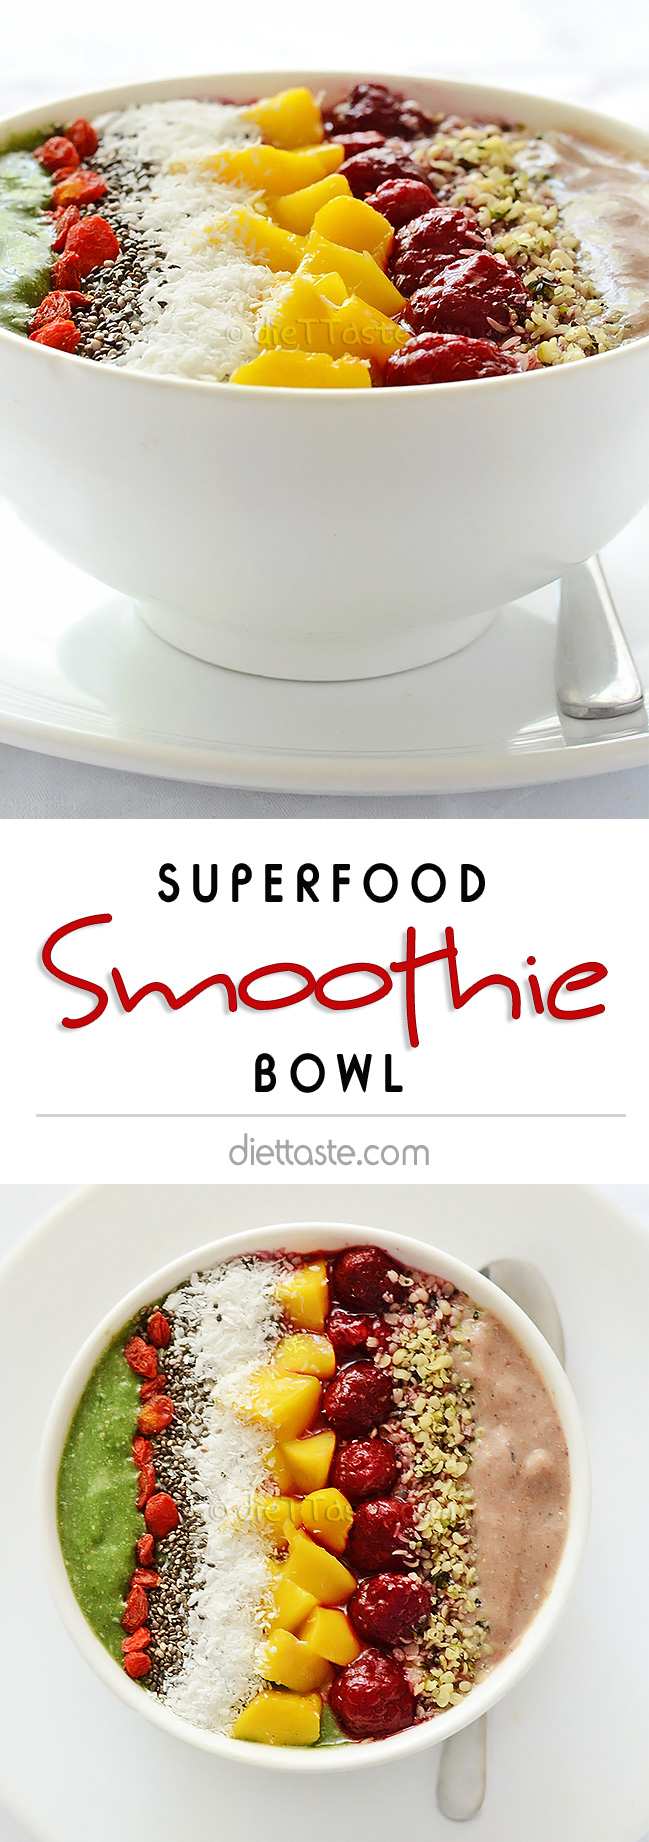 Superfood Smoothie Bowl - diettaste.com